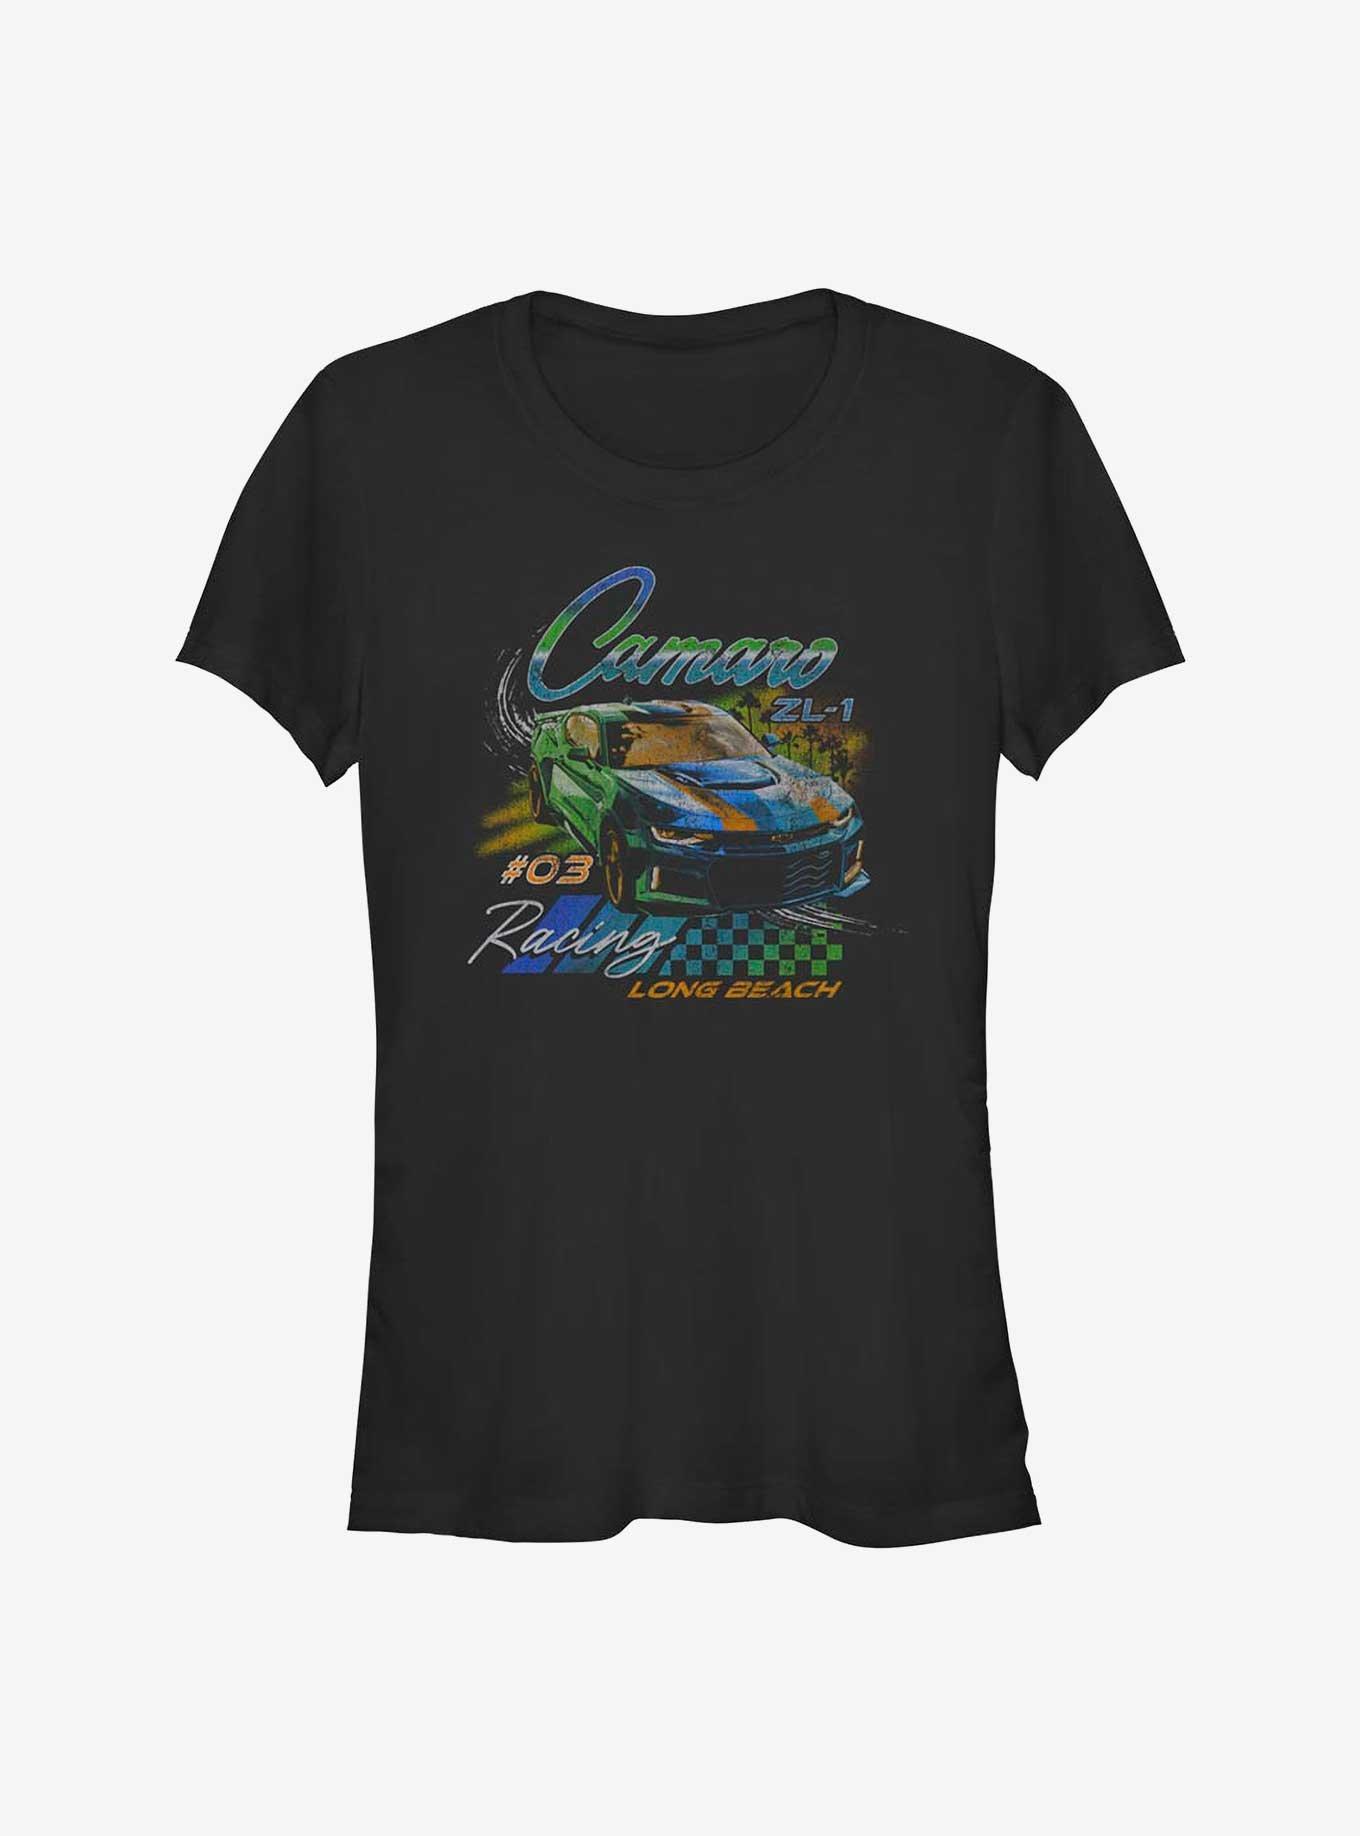 General Motors Camaro Racing Long Beach Girls T-Shirt